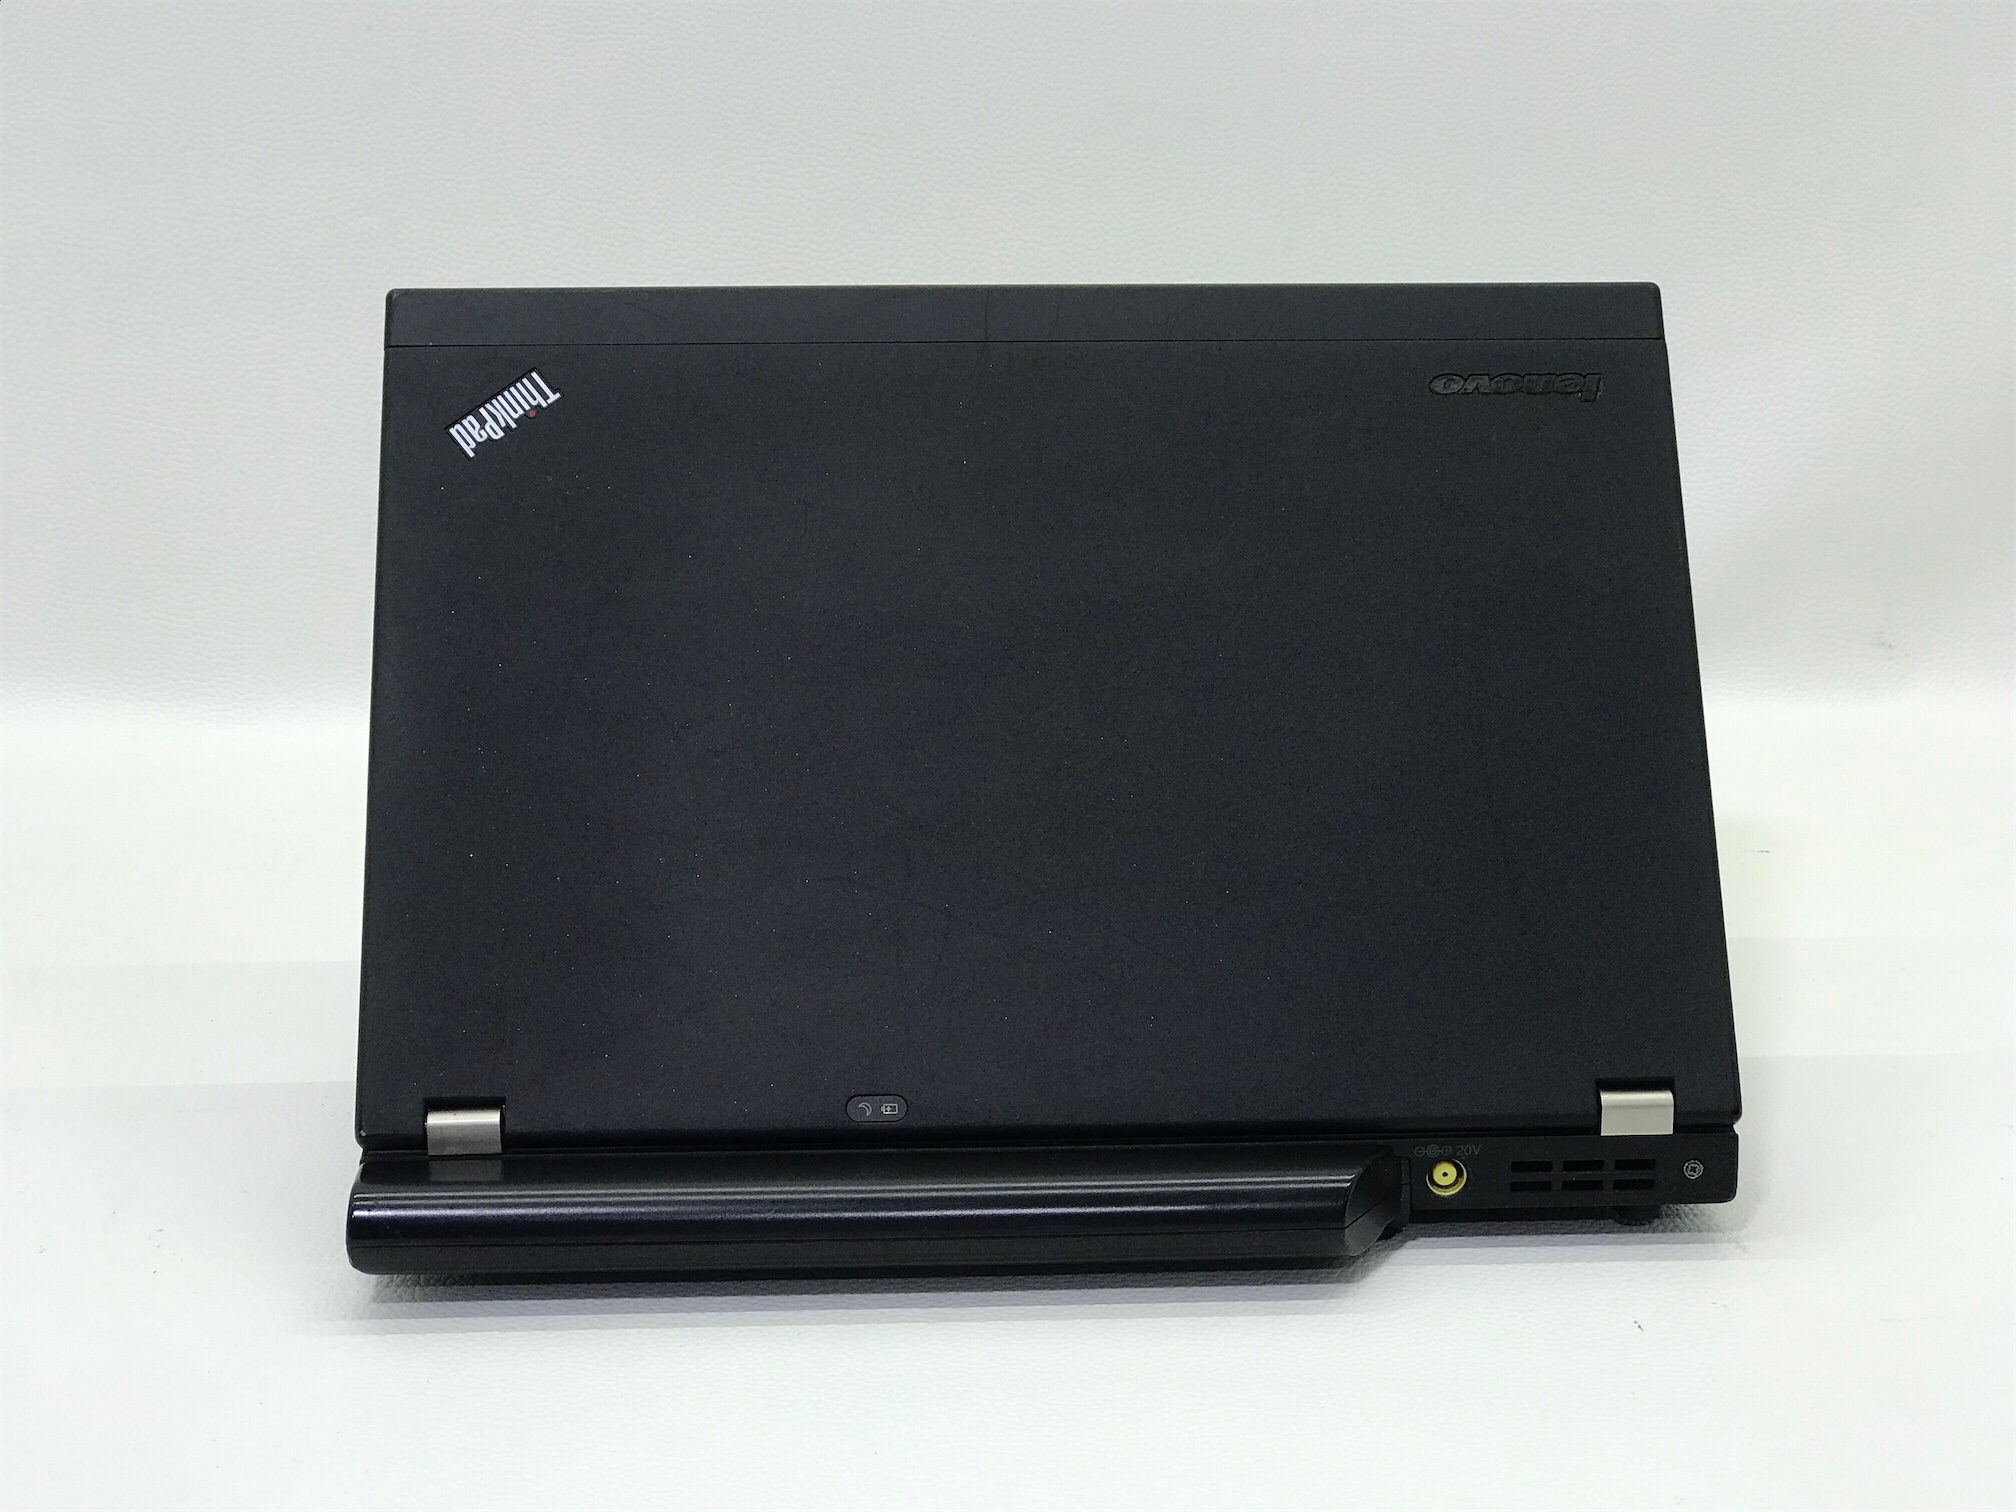 i5 Laptop Lenovo ThinkPad X230 Mouse y Mochila 🎒 GRATIS 1 Año de Garantía